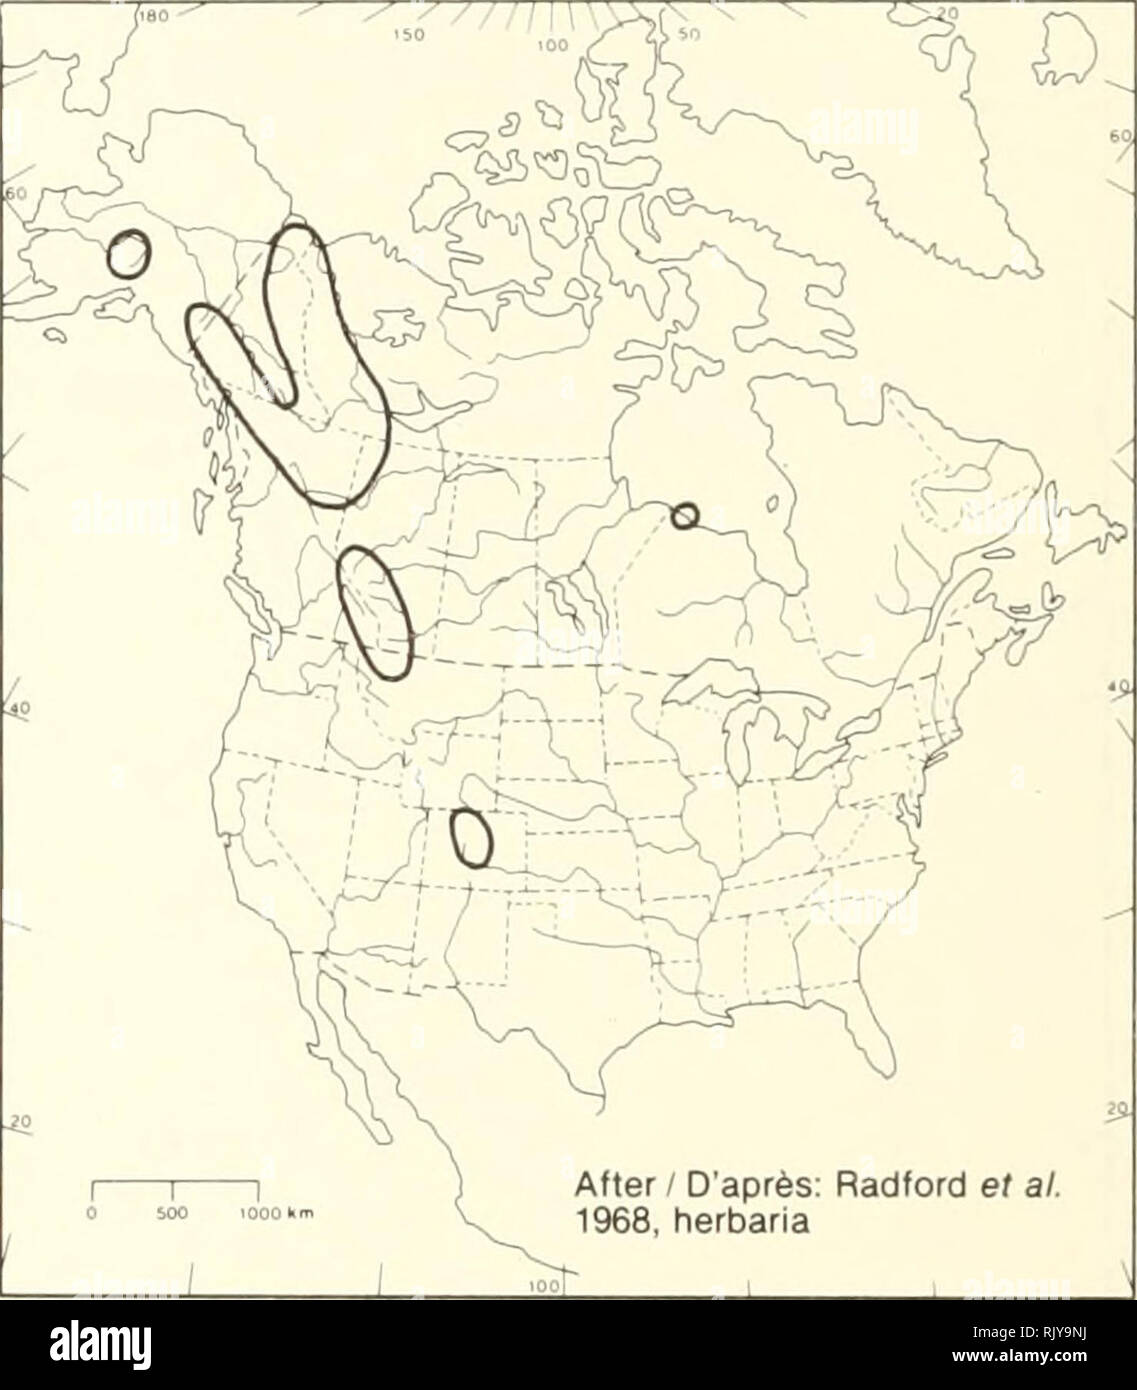 . Atlas of the rare vascular plants of Ontario. Rare plants; Botany. Atlas of the Rare Vascular Plants of Ontario / Atlas des plantes vasculalres rares de l'Ontario ASTERACEAE Aster alpinus L. ssp. vierhapperi {Ohno) Cronq. ,' /- / h 1 1» ! 1- 1 1'. Specimens / Spécimens DAO, TRT O Pre 1925 / 0 1925-1949 / «1950-1964 /-^ ' -, • Post 1964 y^ 1 1 ^1^ ^1^^^ /' ^^^ ^y ^xy'^r^ (  /^ r&quot;' y-^r^ '^^^^i^ ^  sT '$f fi^. s - iéi^% ^ i  -,, , ,. ^'^'^&quot;T^^ -^-jf-yf &gt; &quot;i^X Alpine aster Aster HABITAT: Arctic-alpine tundra. STATUS: Rare in the continental Northwest Territories. Endangere Stock Photo